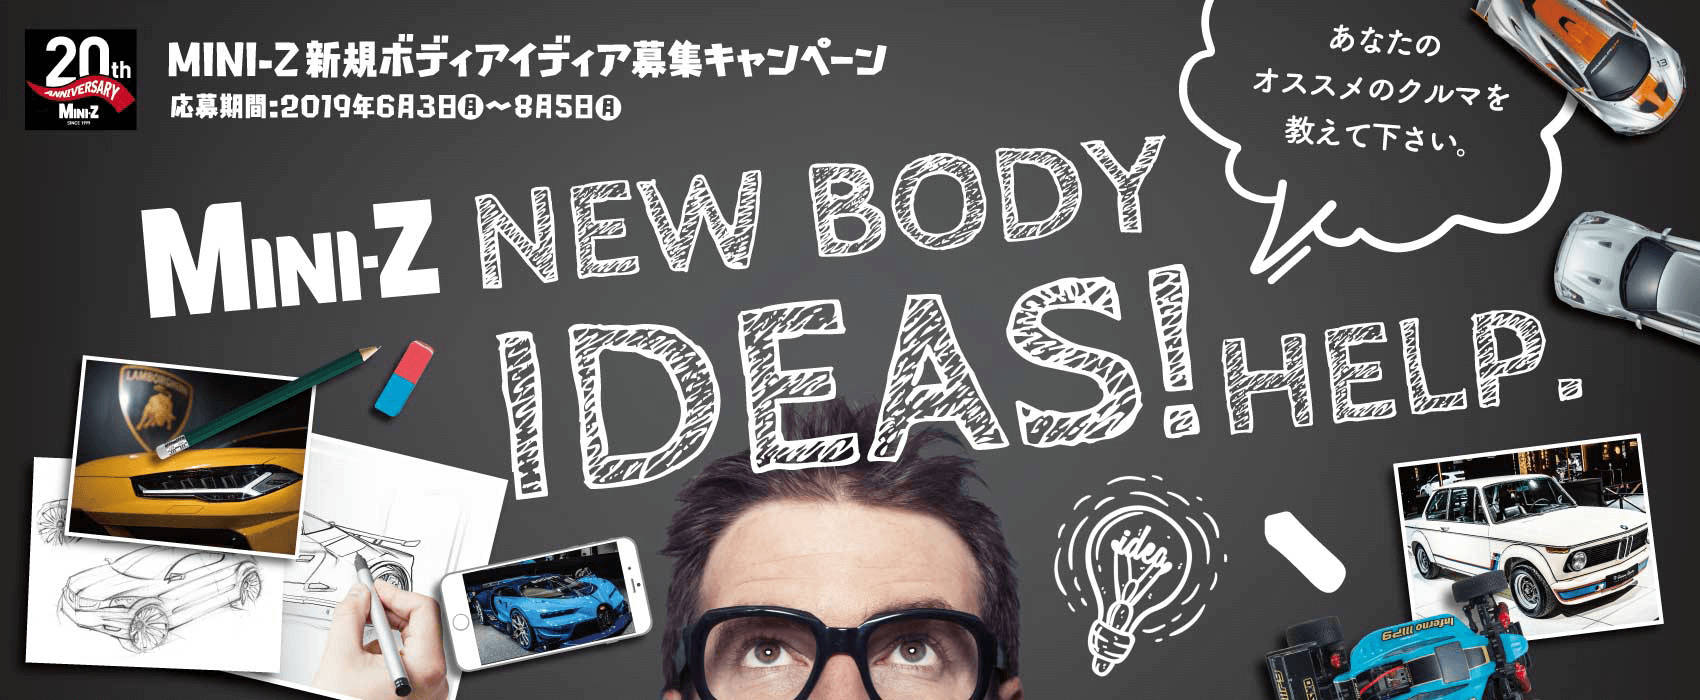 20th Anniversary Fan's choice new MiniZ body contest !